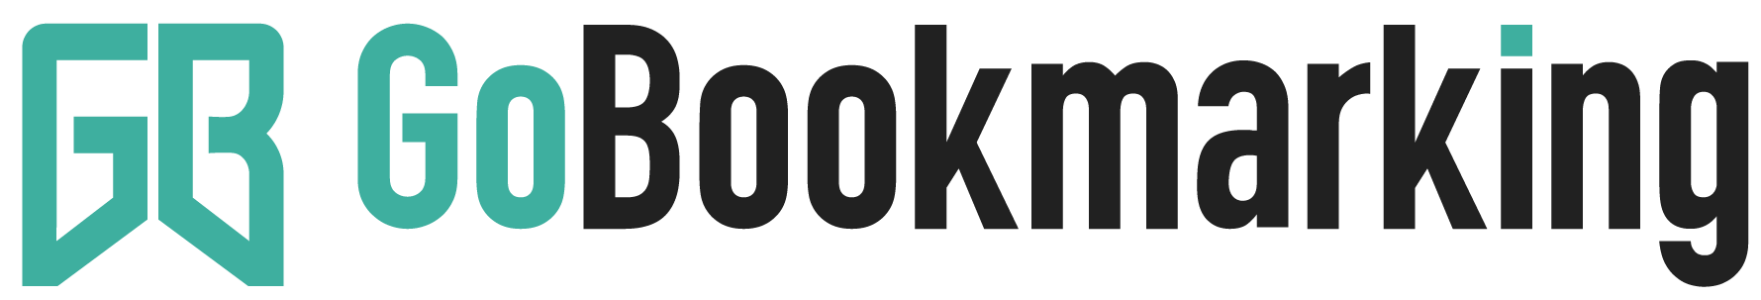 Gobookmarking